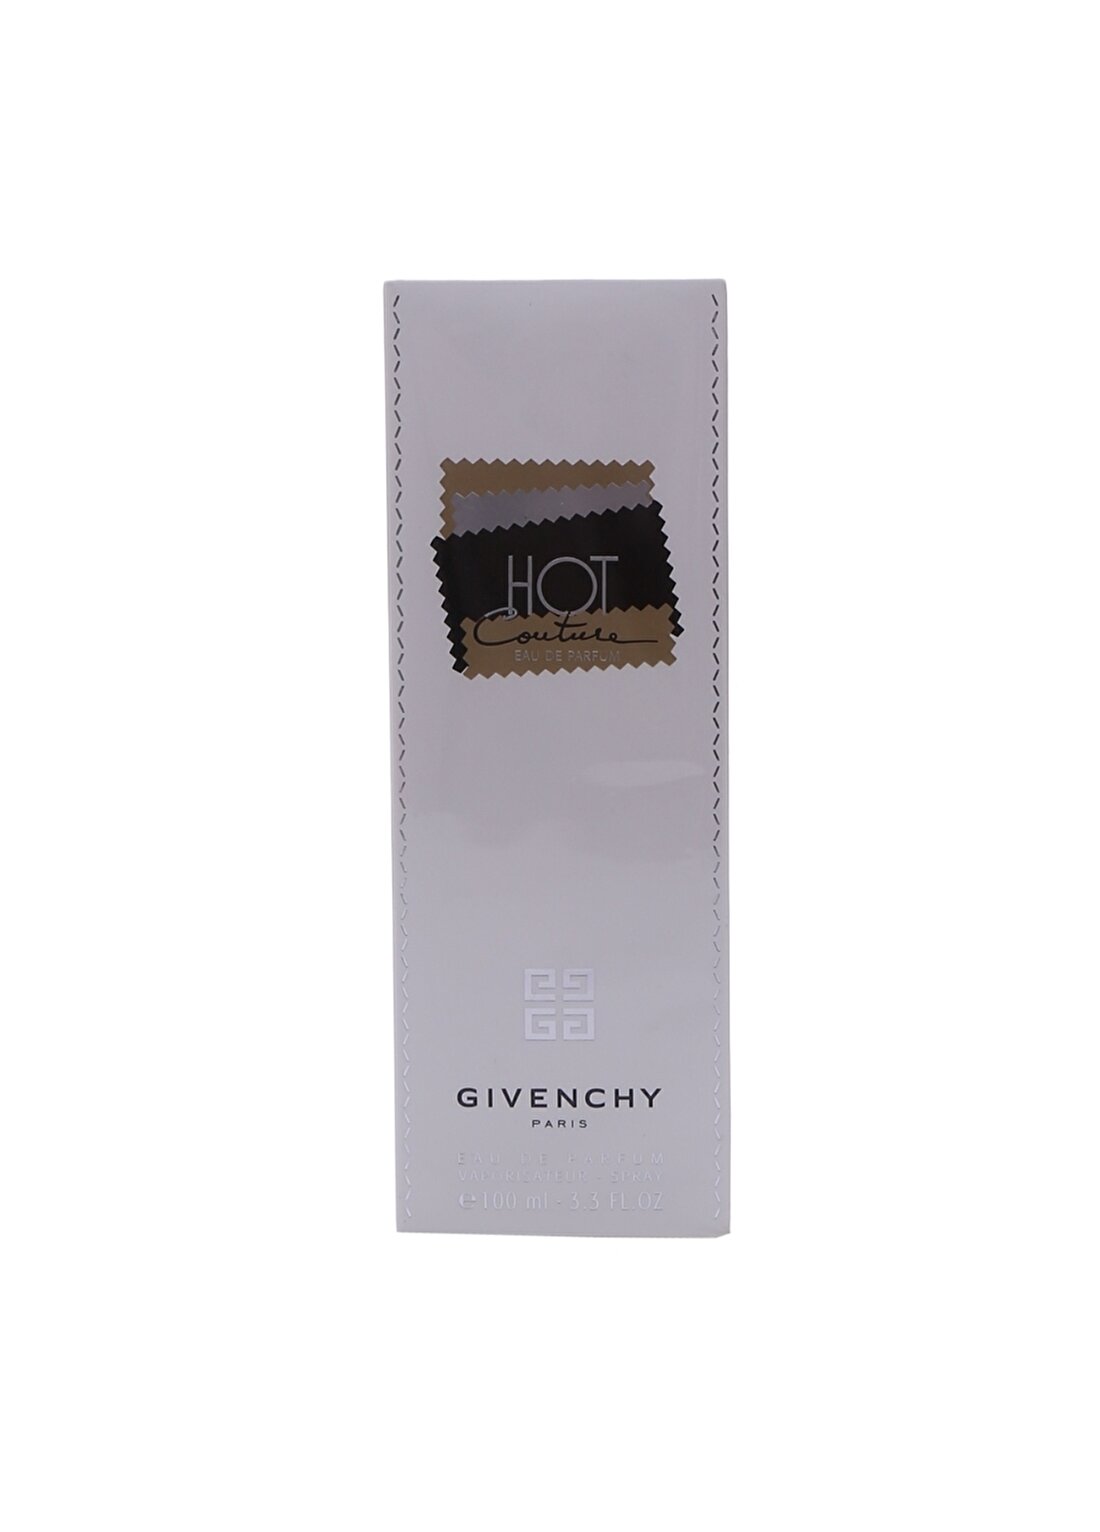 Givenchy Hot Couture Edp Spray Parfüm